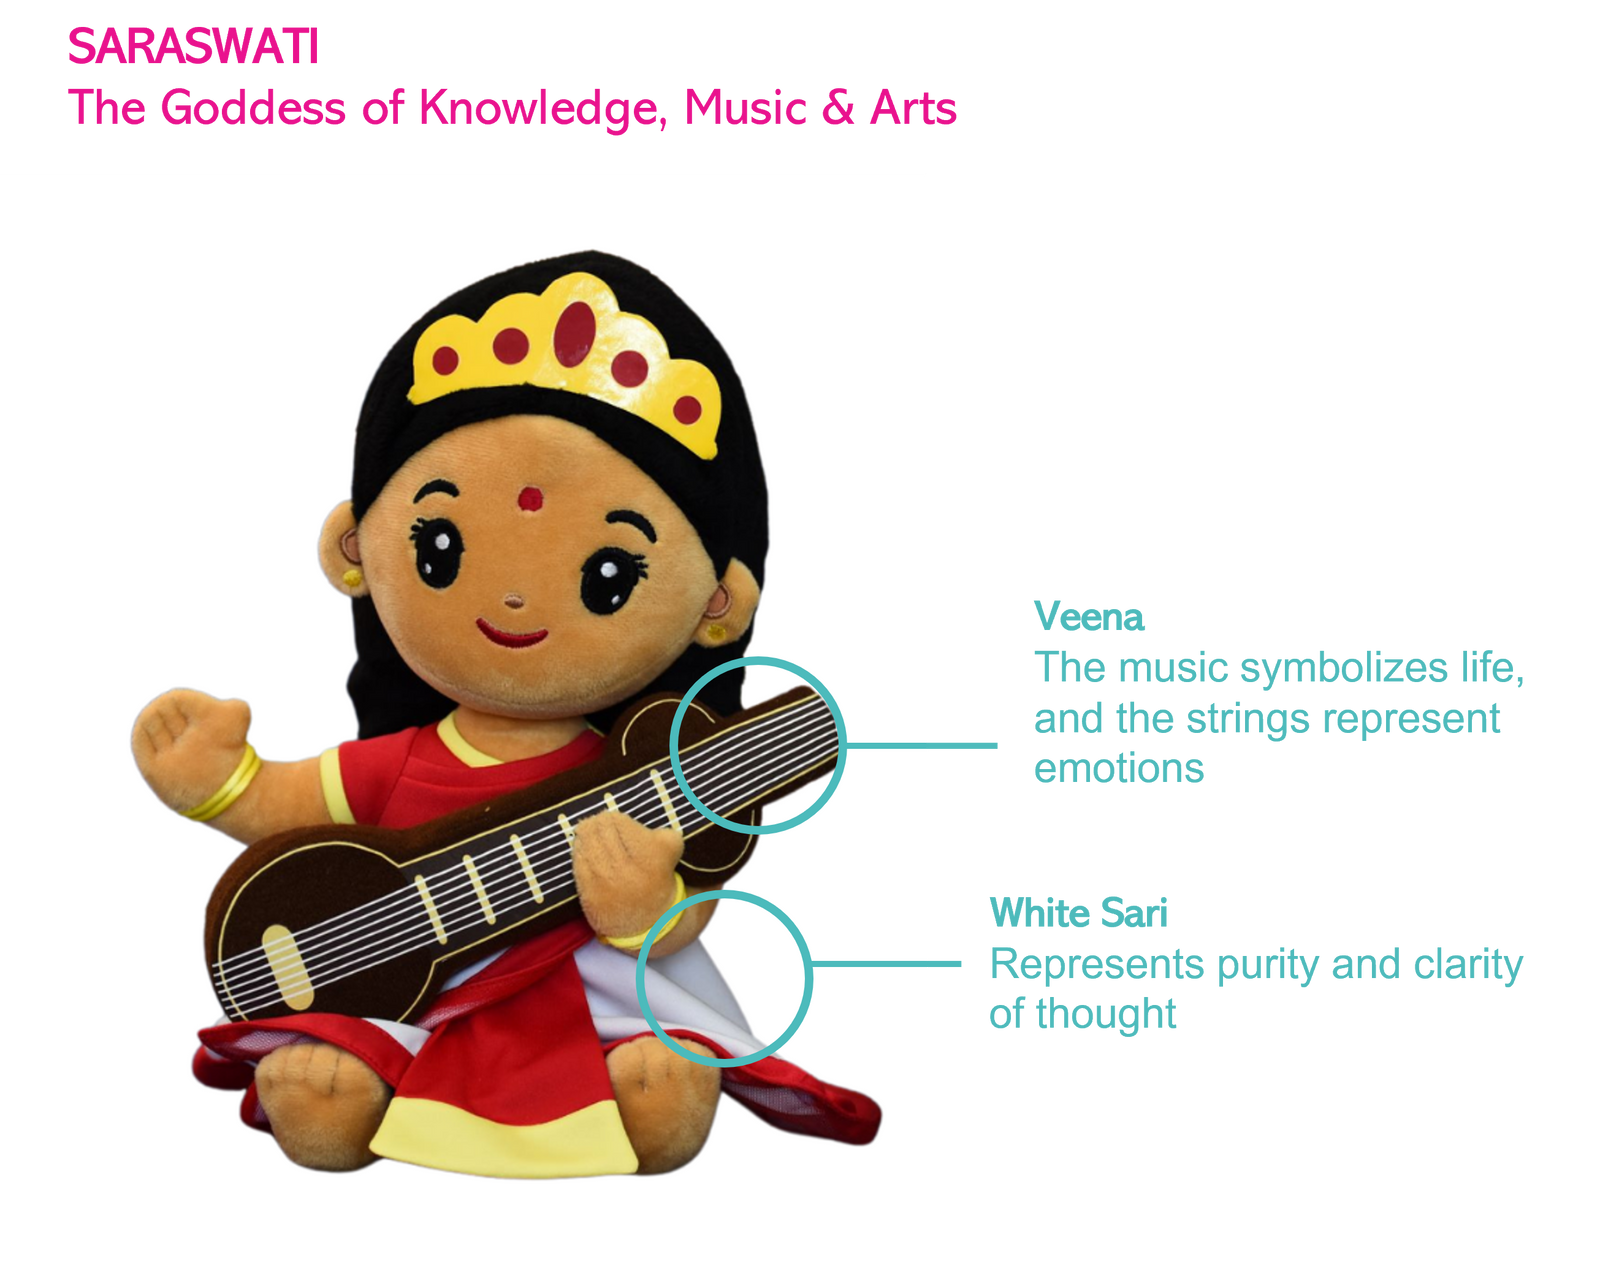 saraswati devi plush toy photo with icons describing symbolism